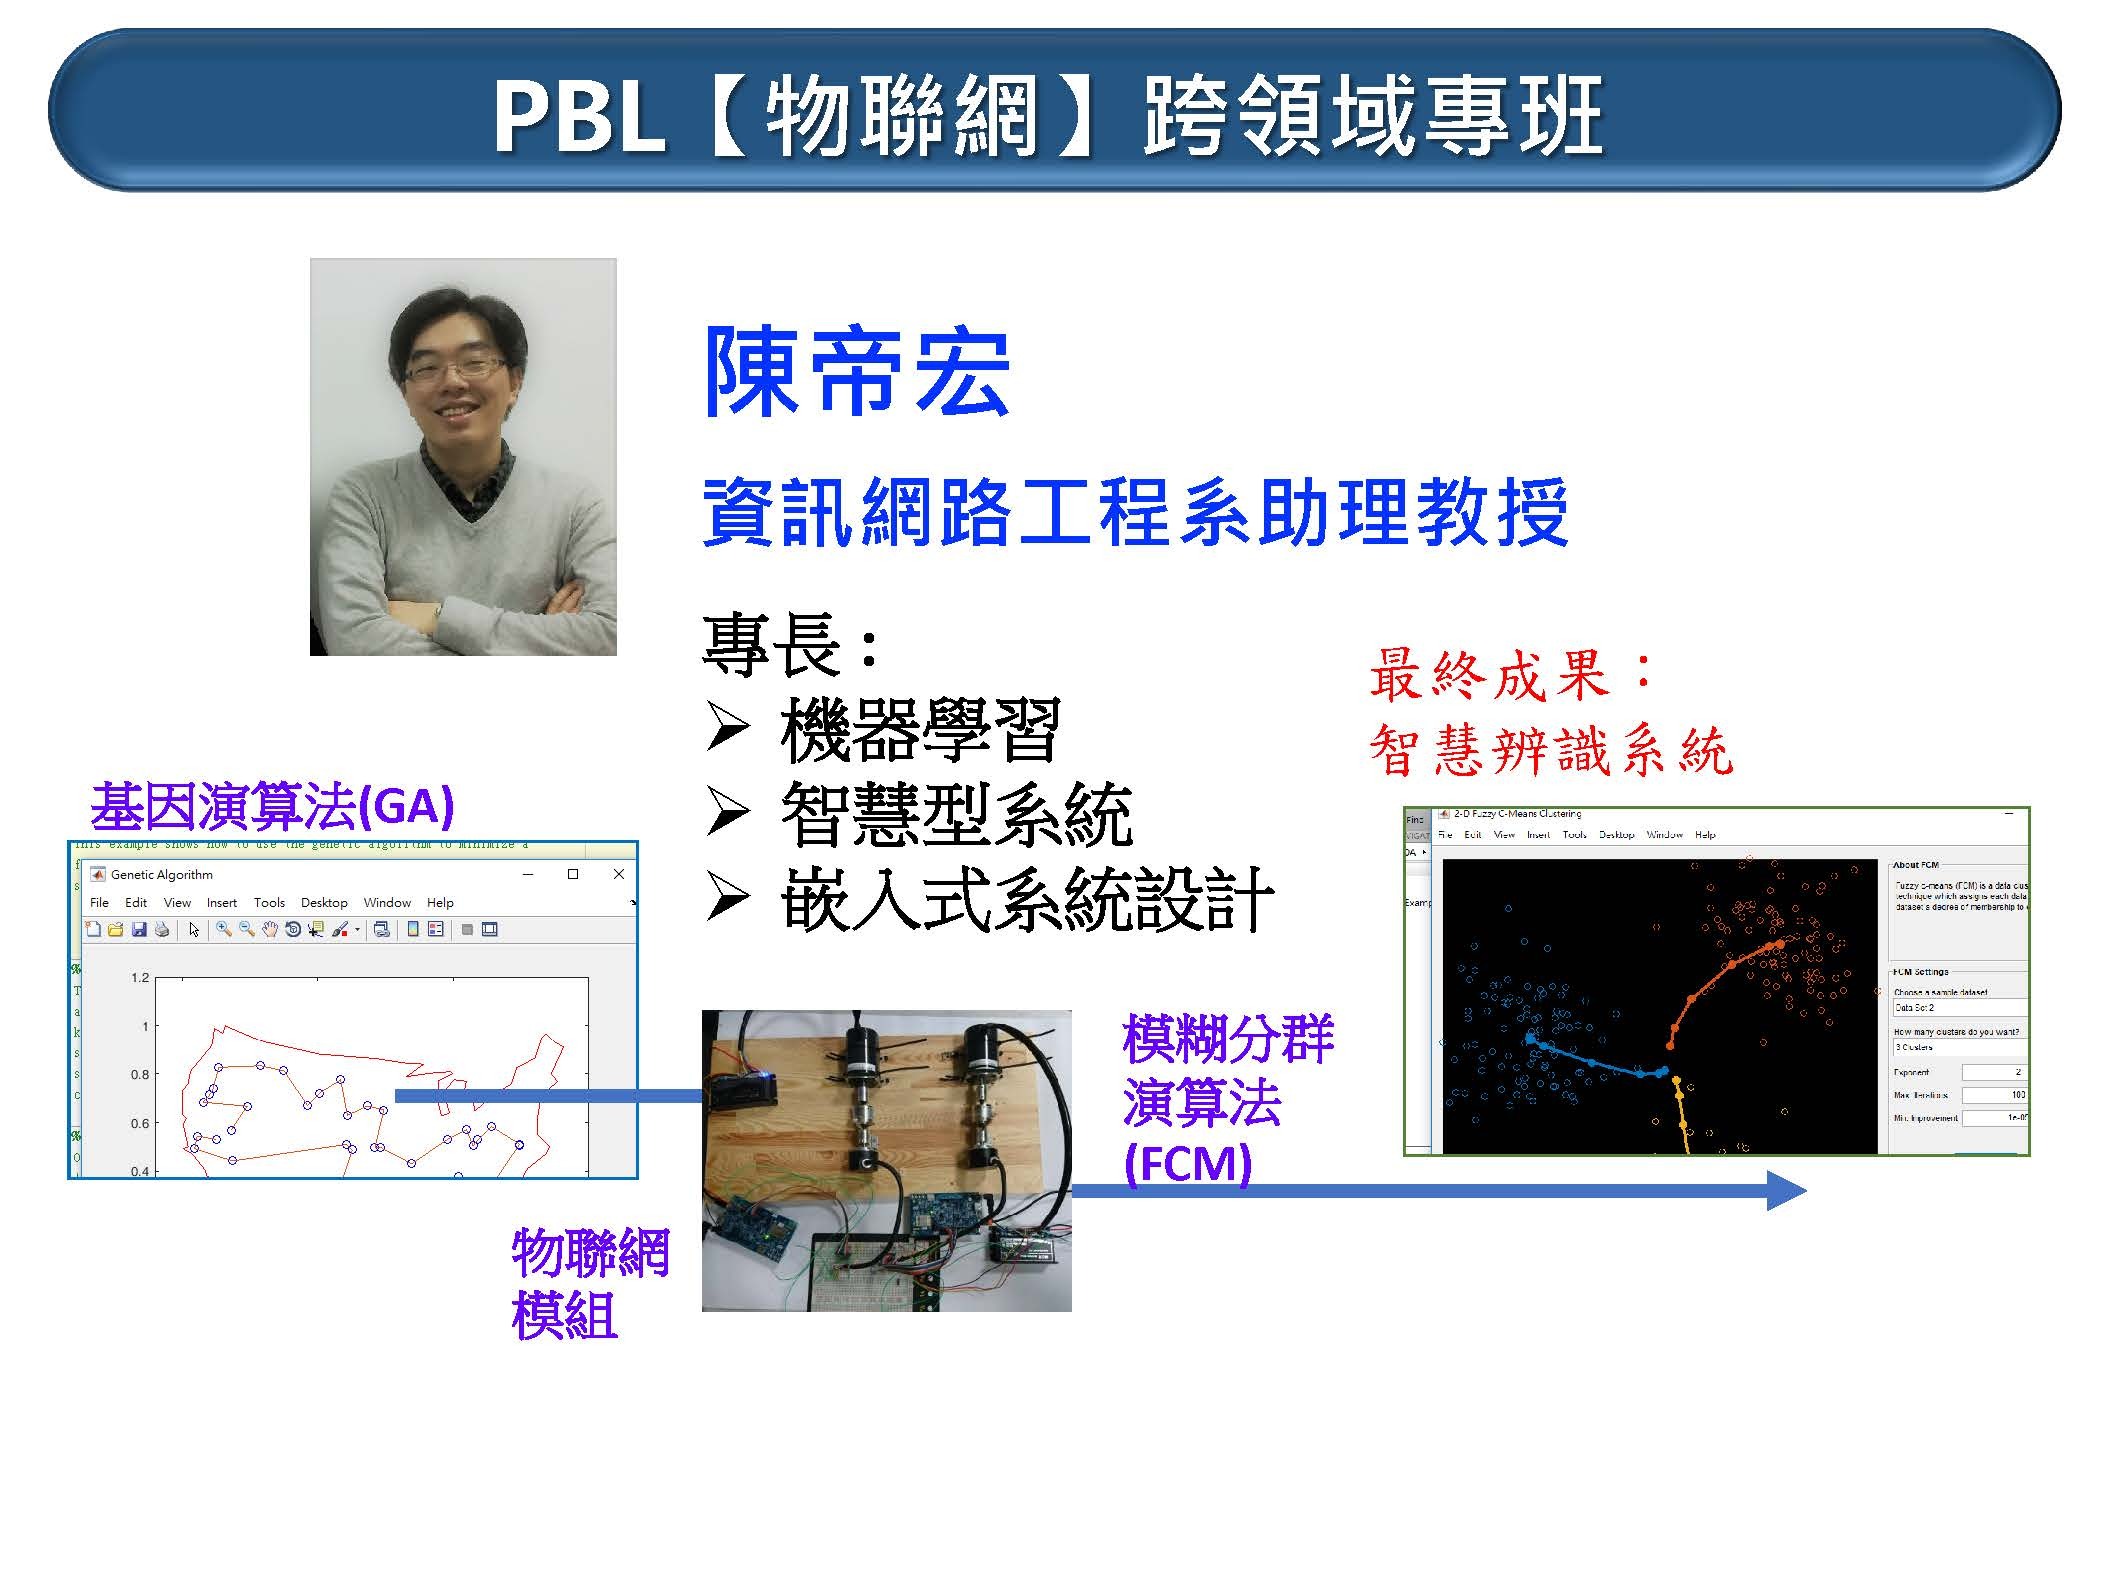 PBL(物聯網)跨領域專班指導老師陳帝宏簡介示意圖